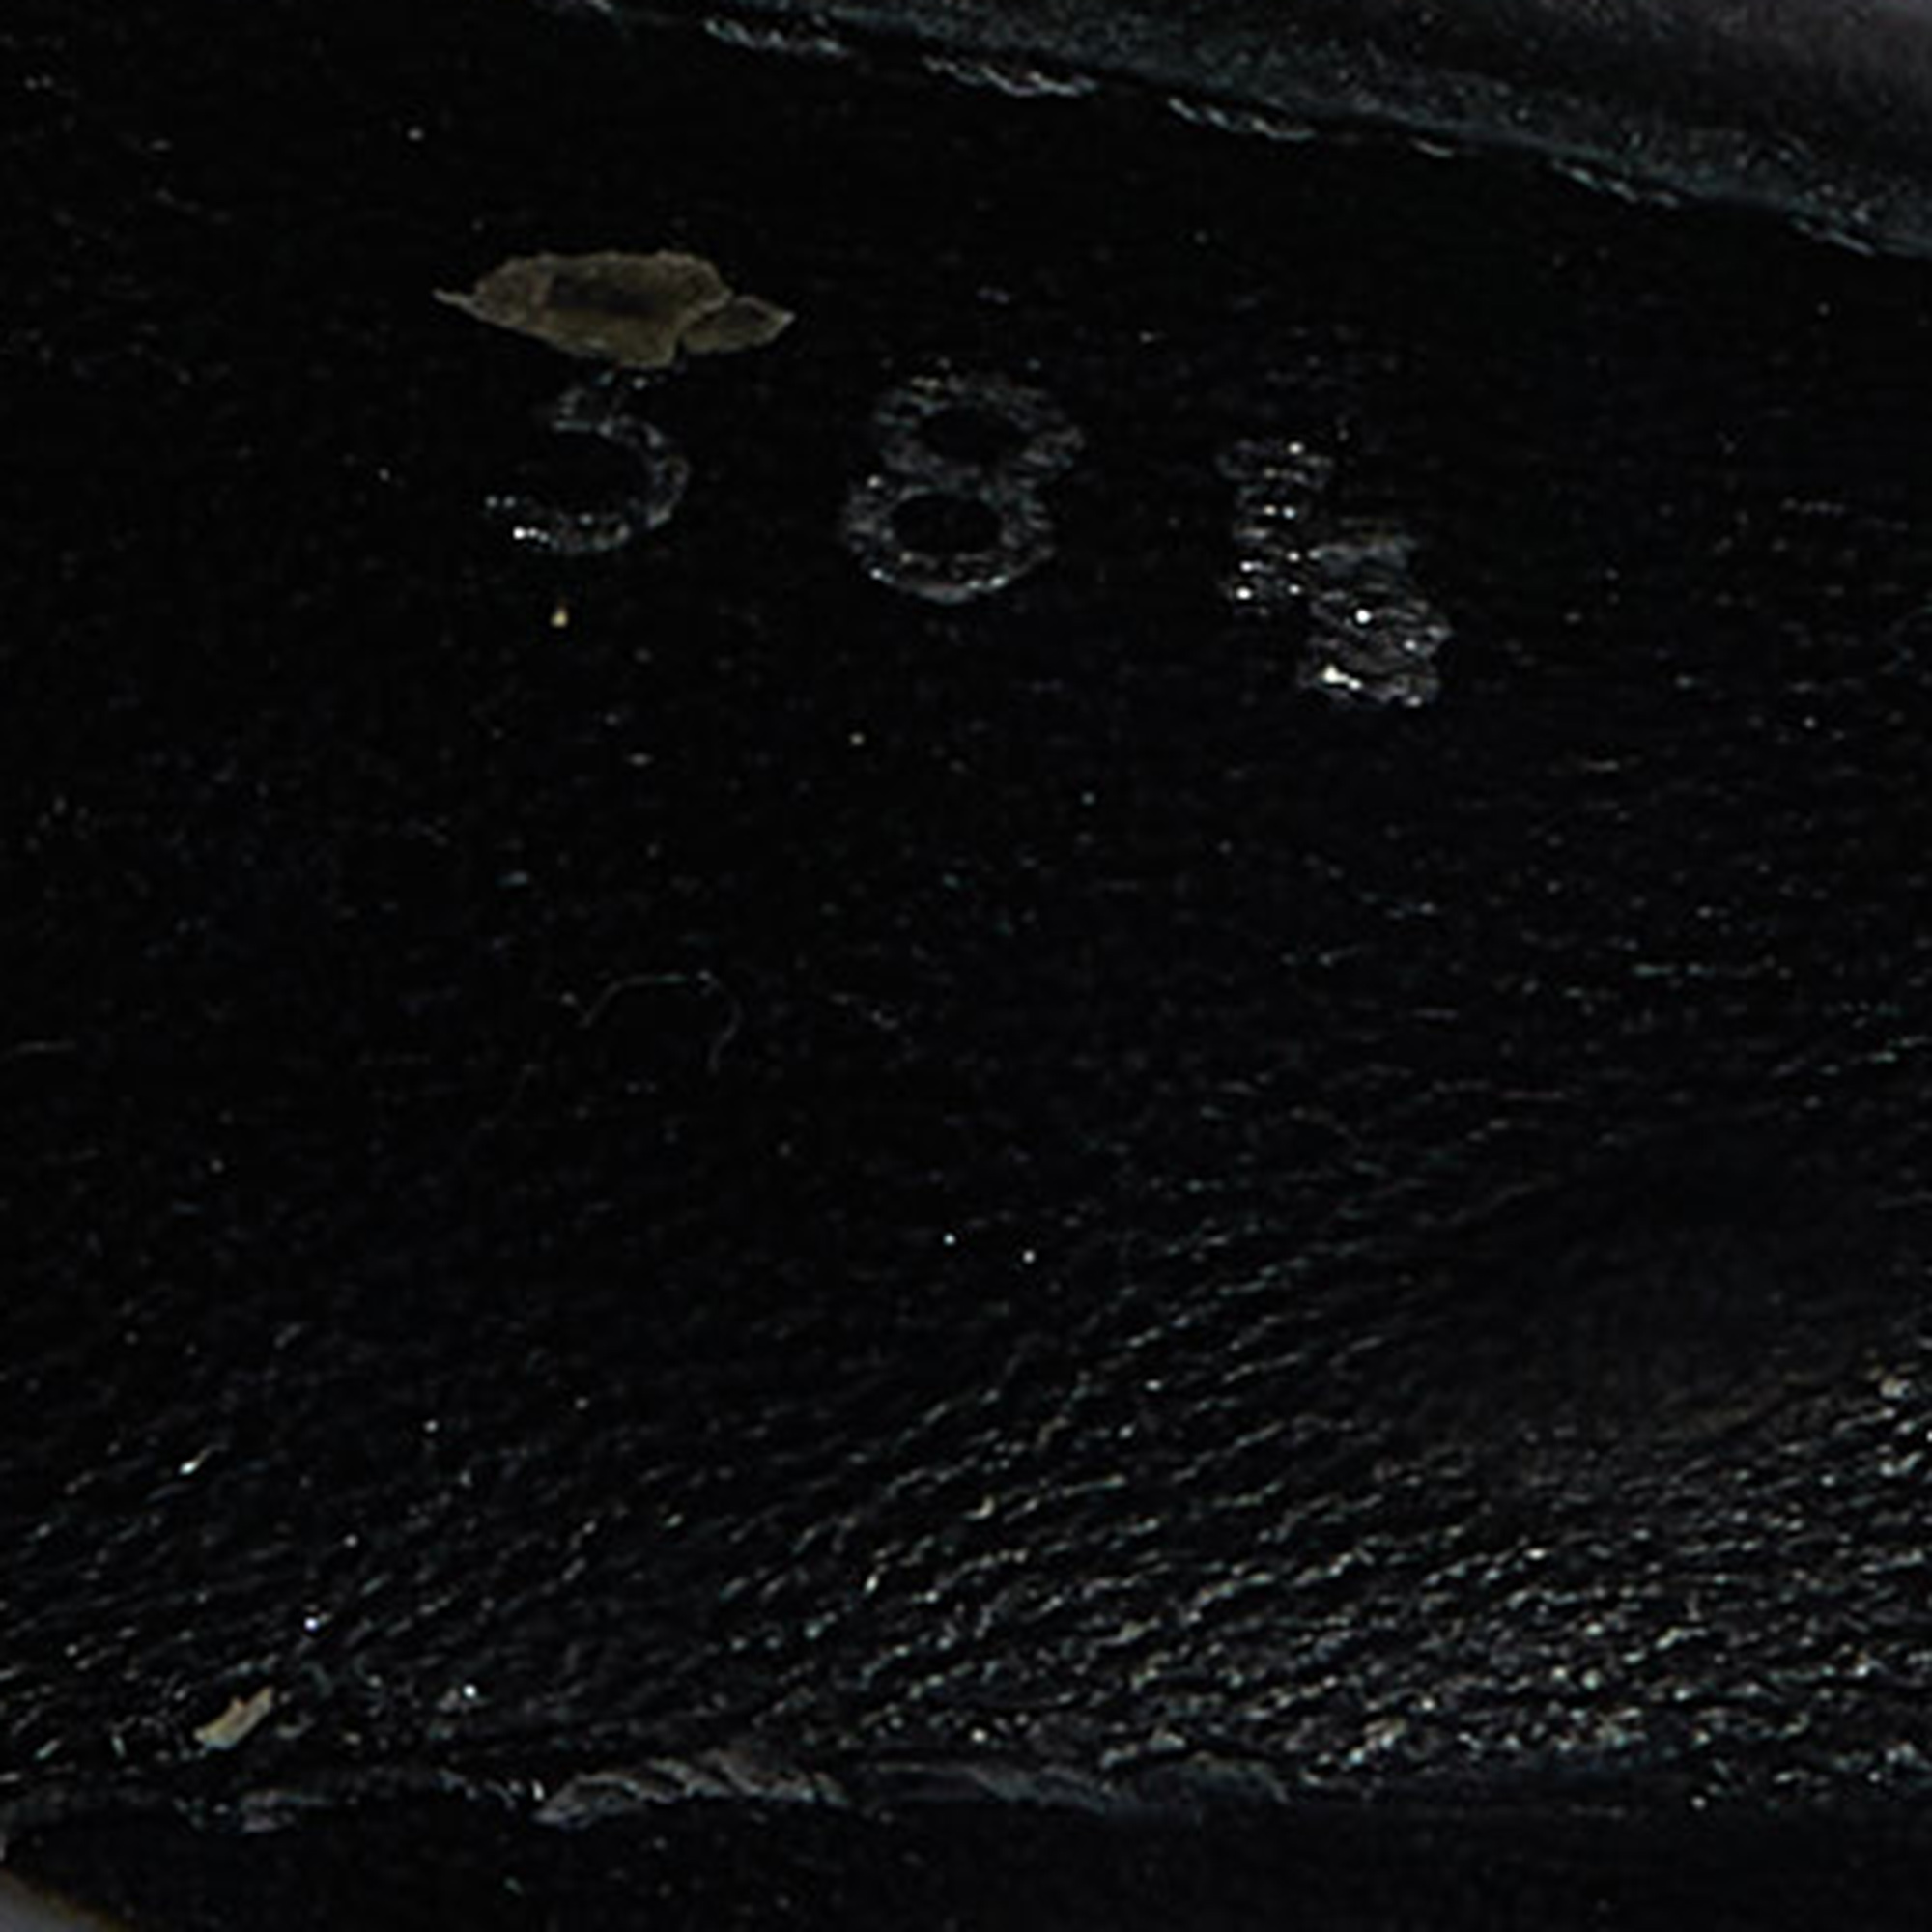 Louis Vuitton Brown/Black Monogram Canvas And Leather Archlight Slingback Pumps Size 38.5